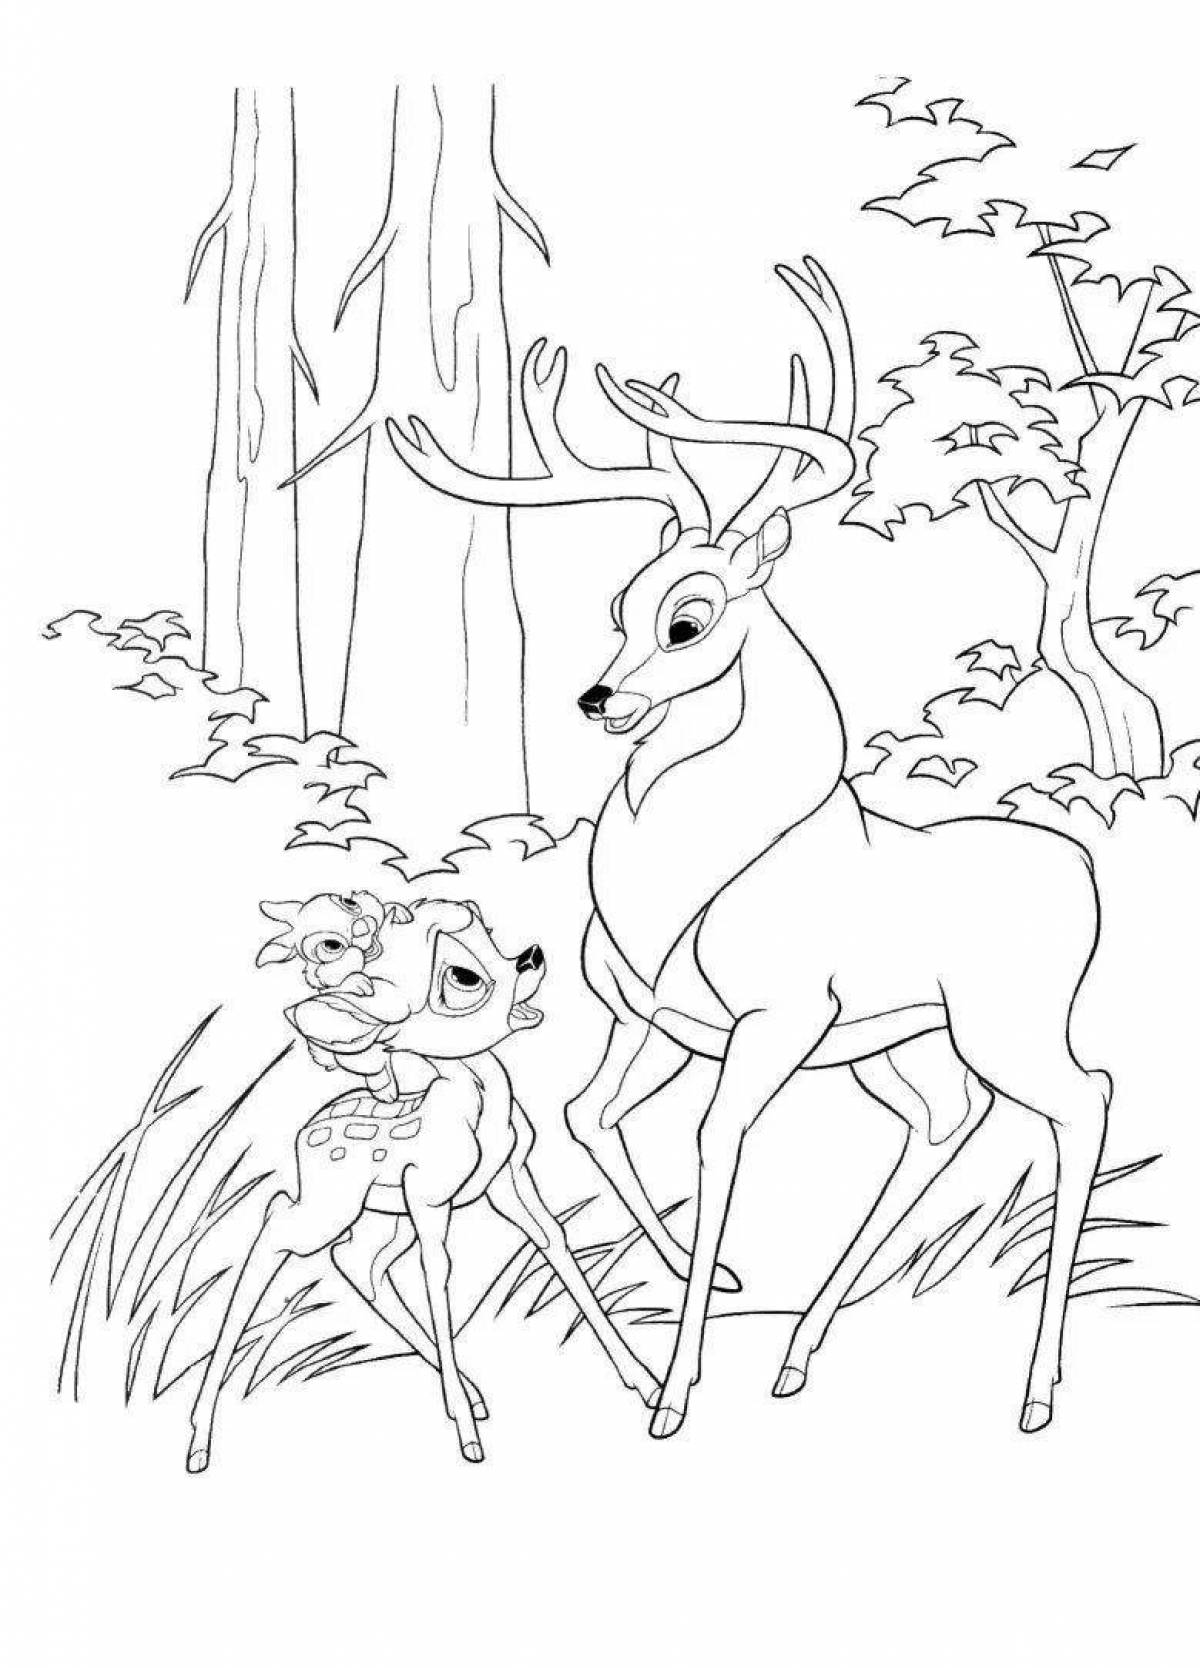 Coloring deer by luck